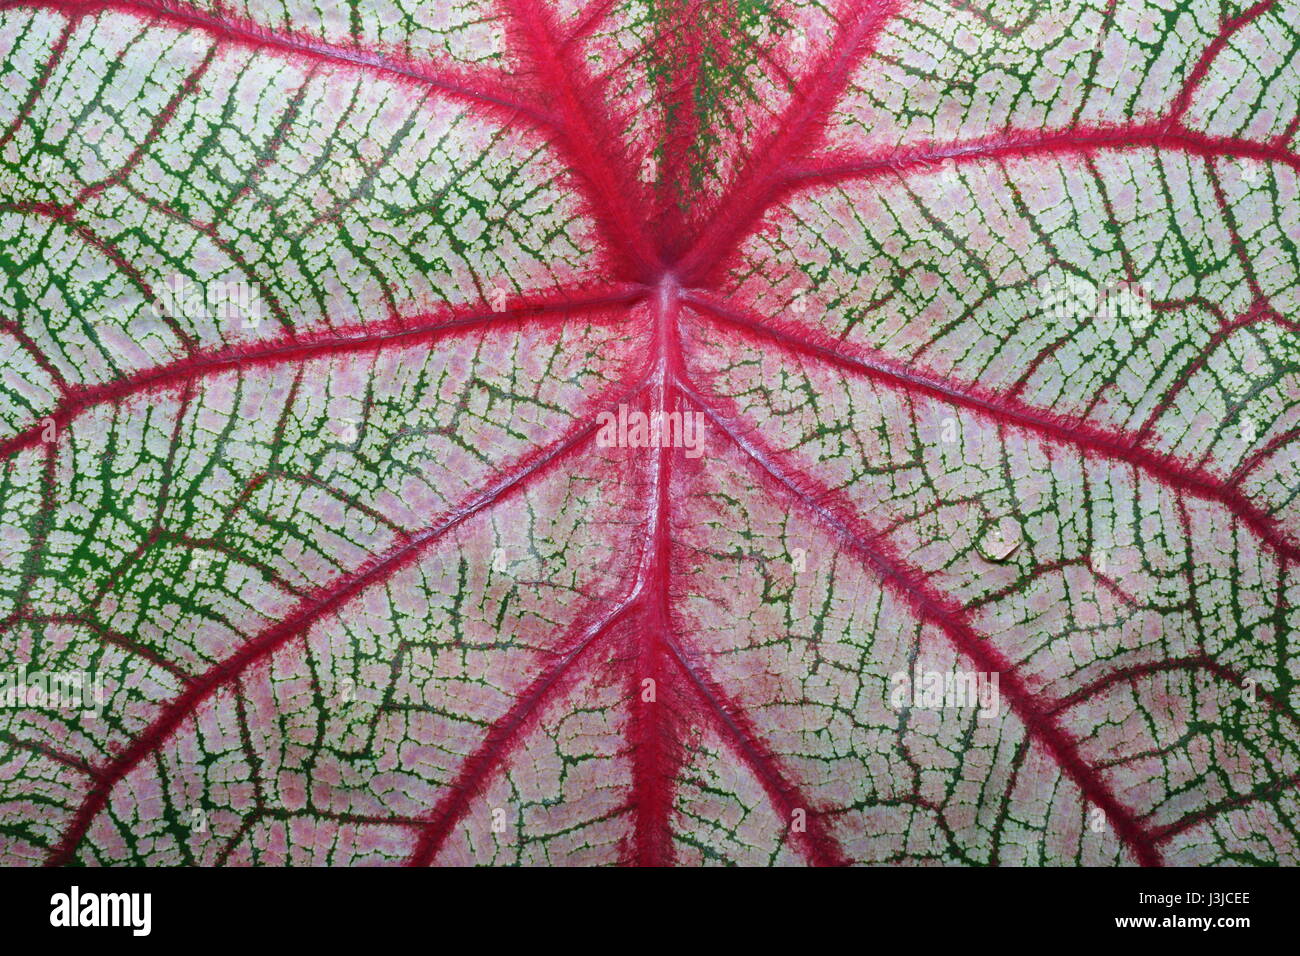 Leaf detail Caladium bicolor tropical plant, Elephant Ear Stock Photo